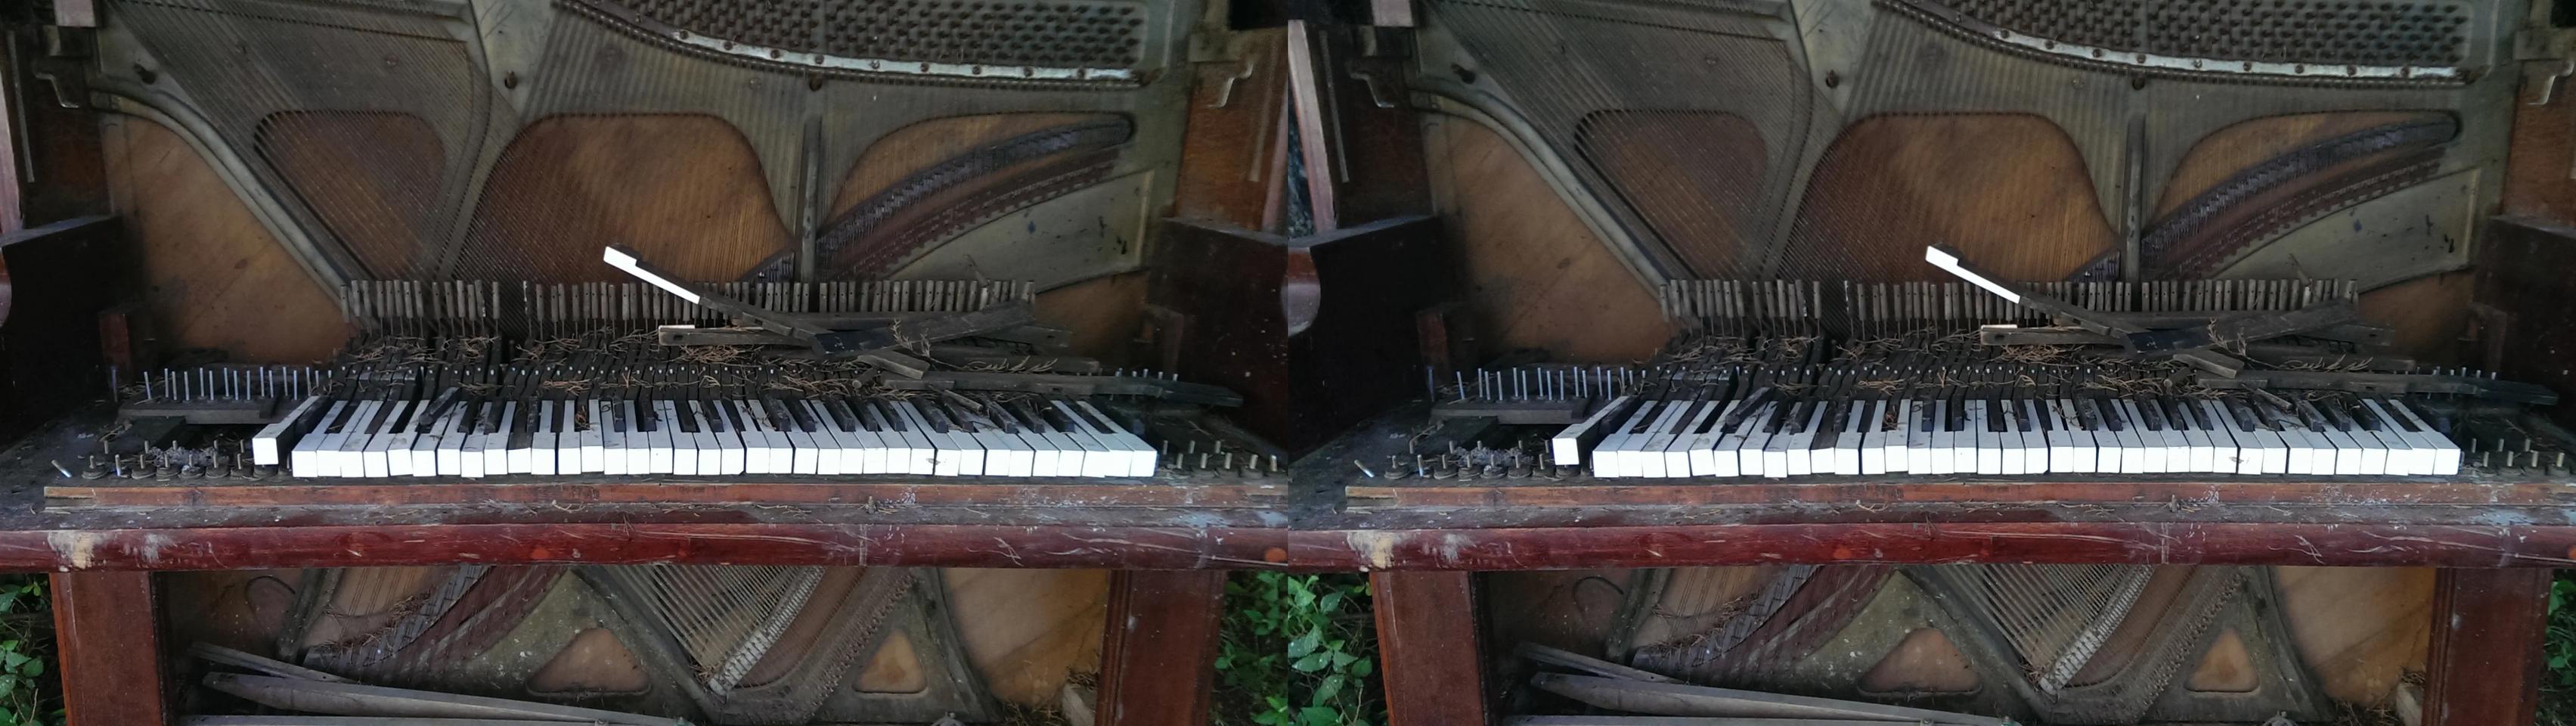 The Forgotten Piano